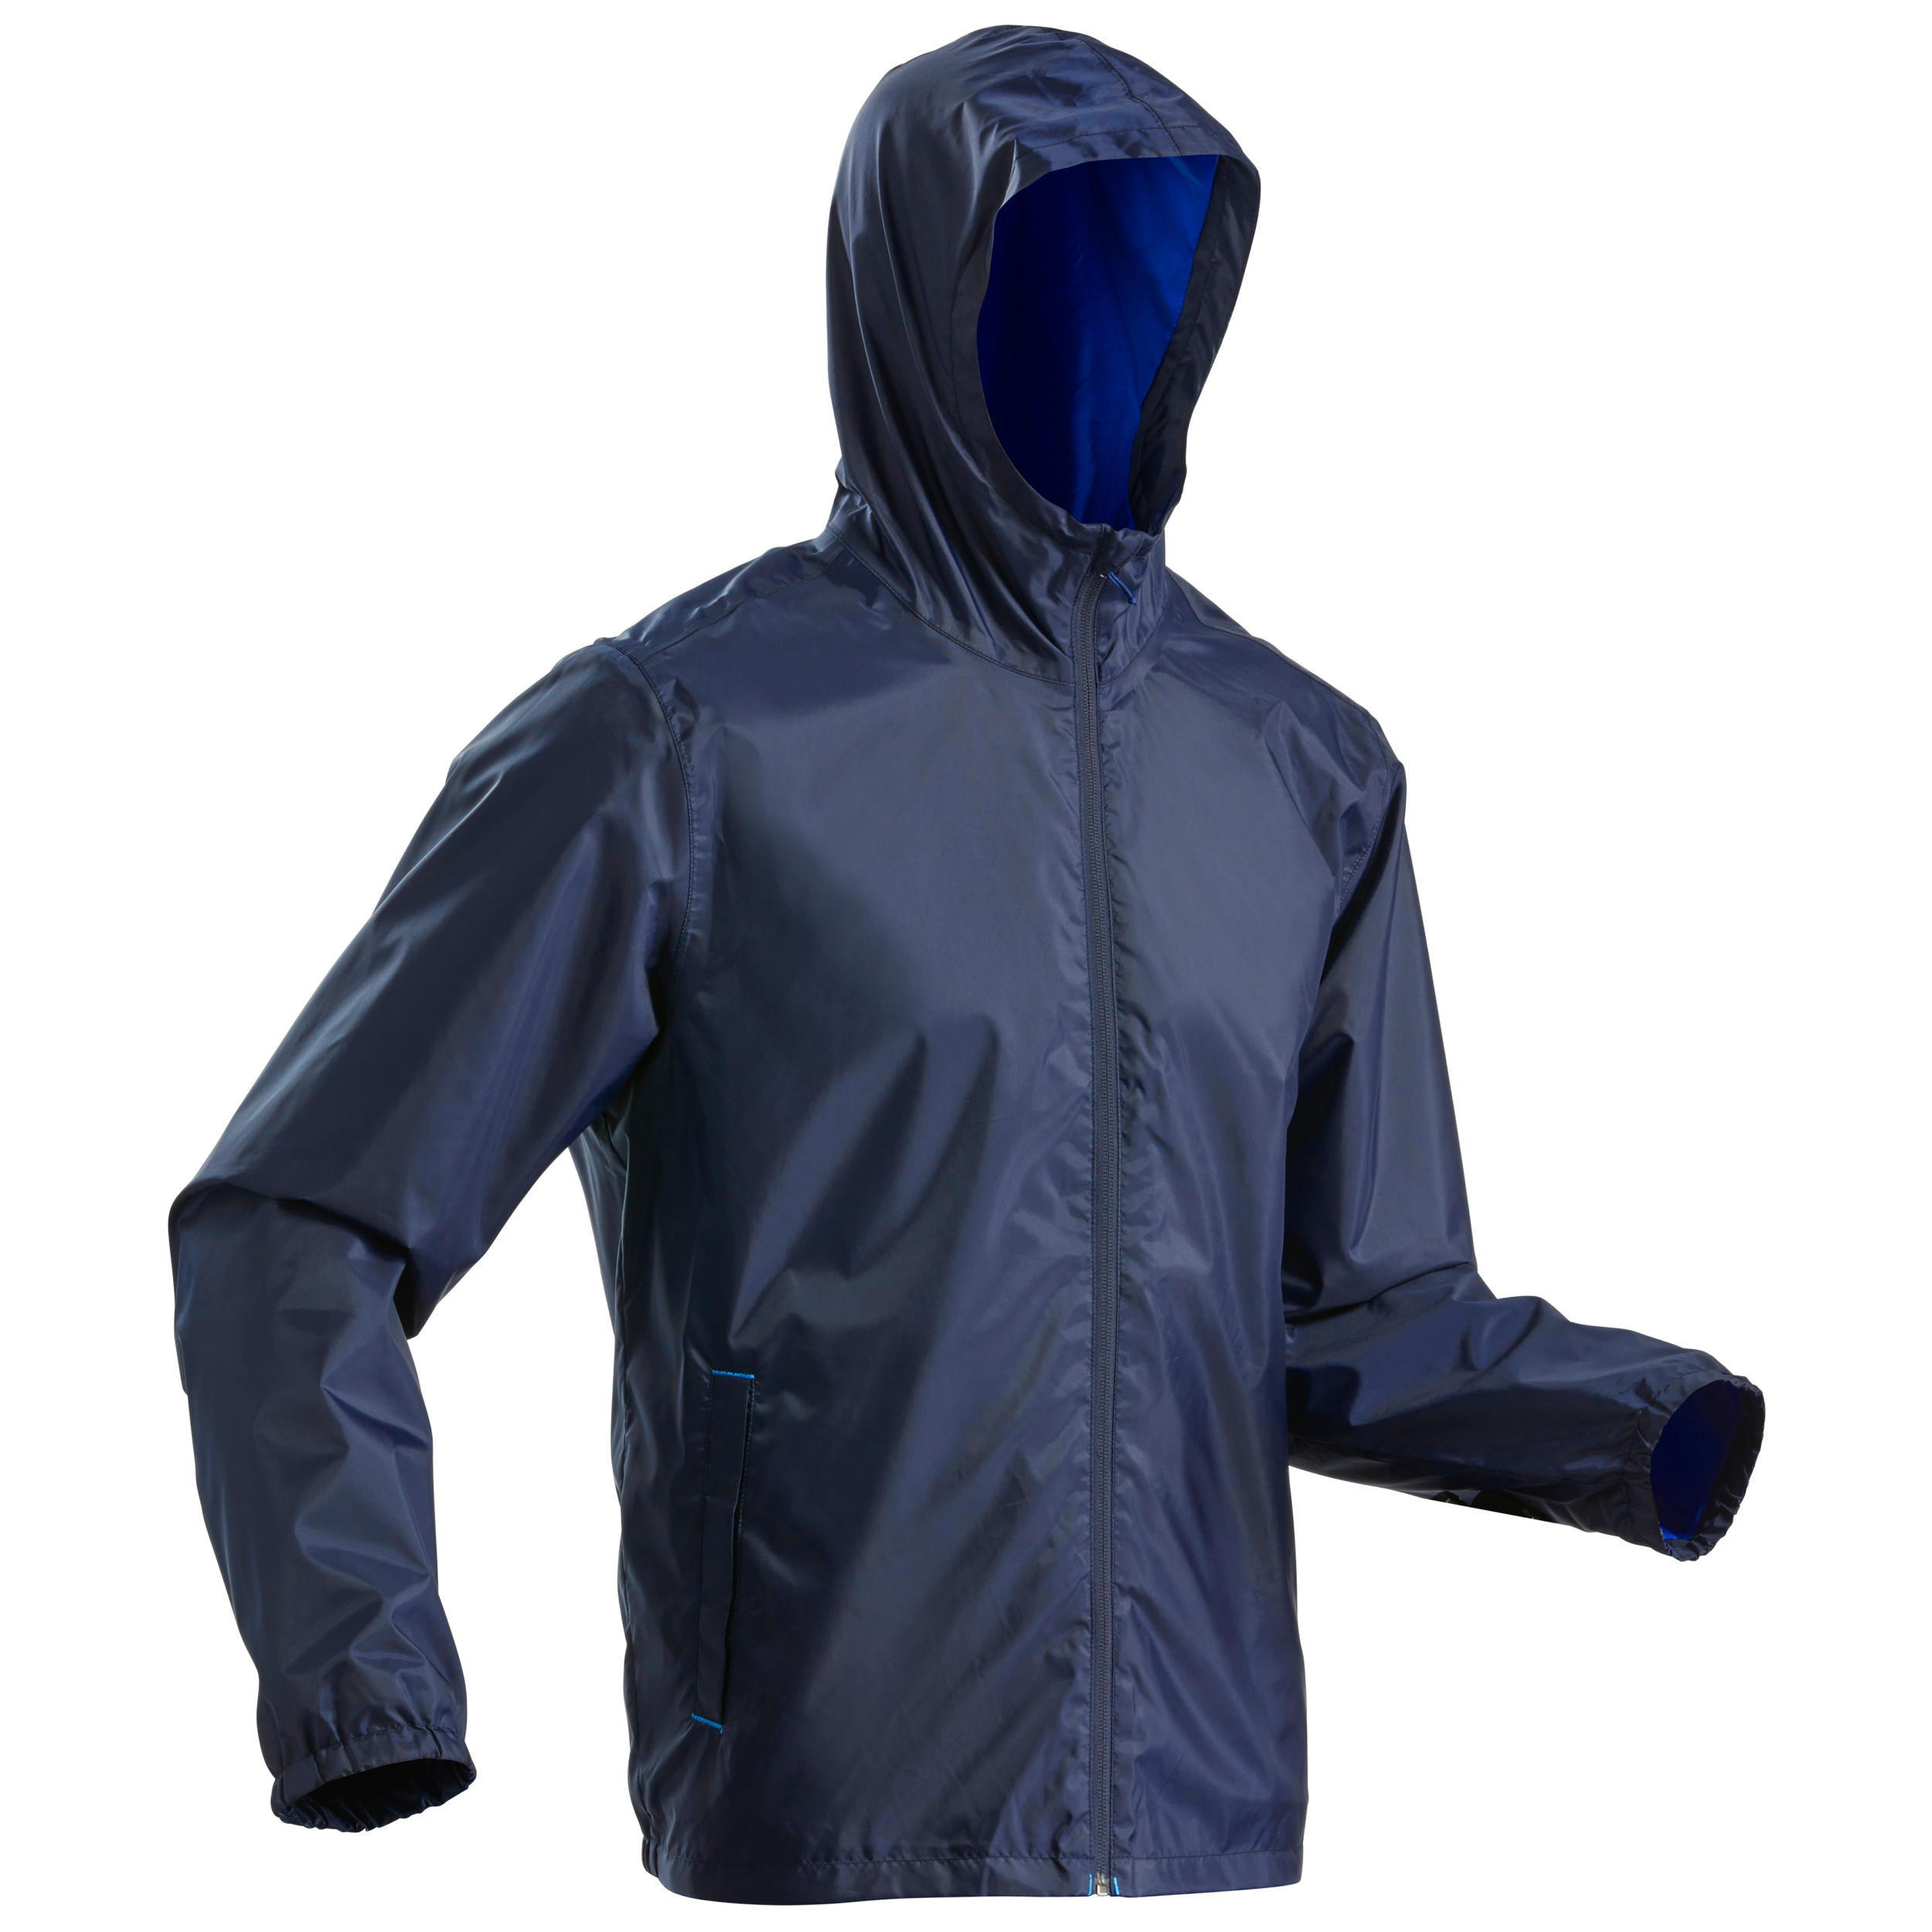 raincoat for men decathlon